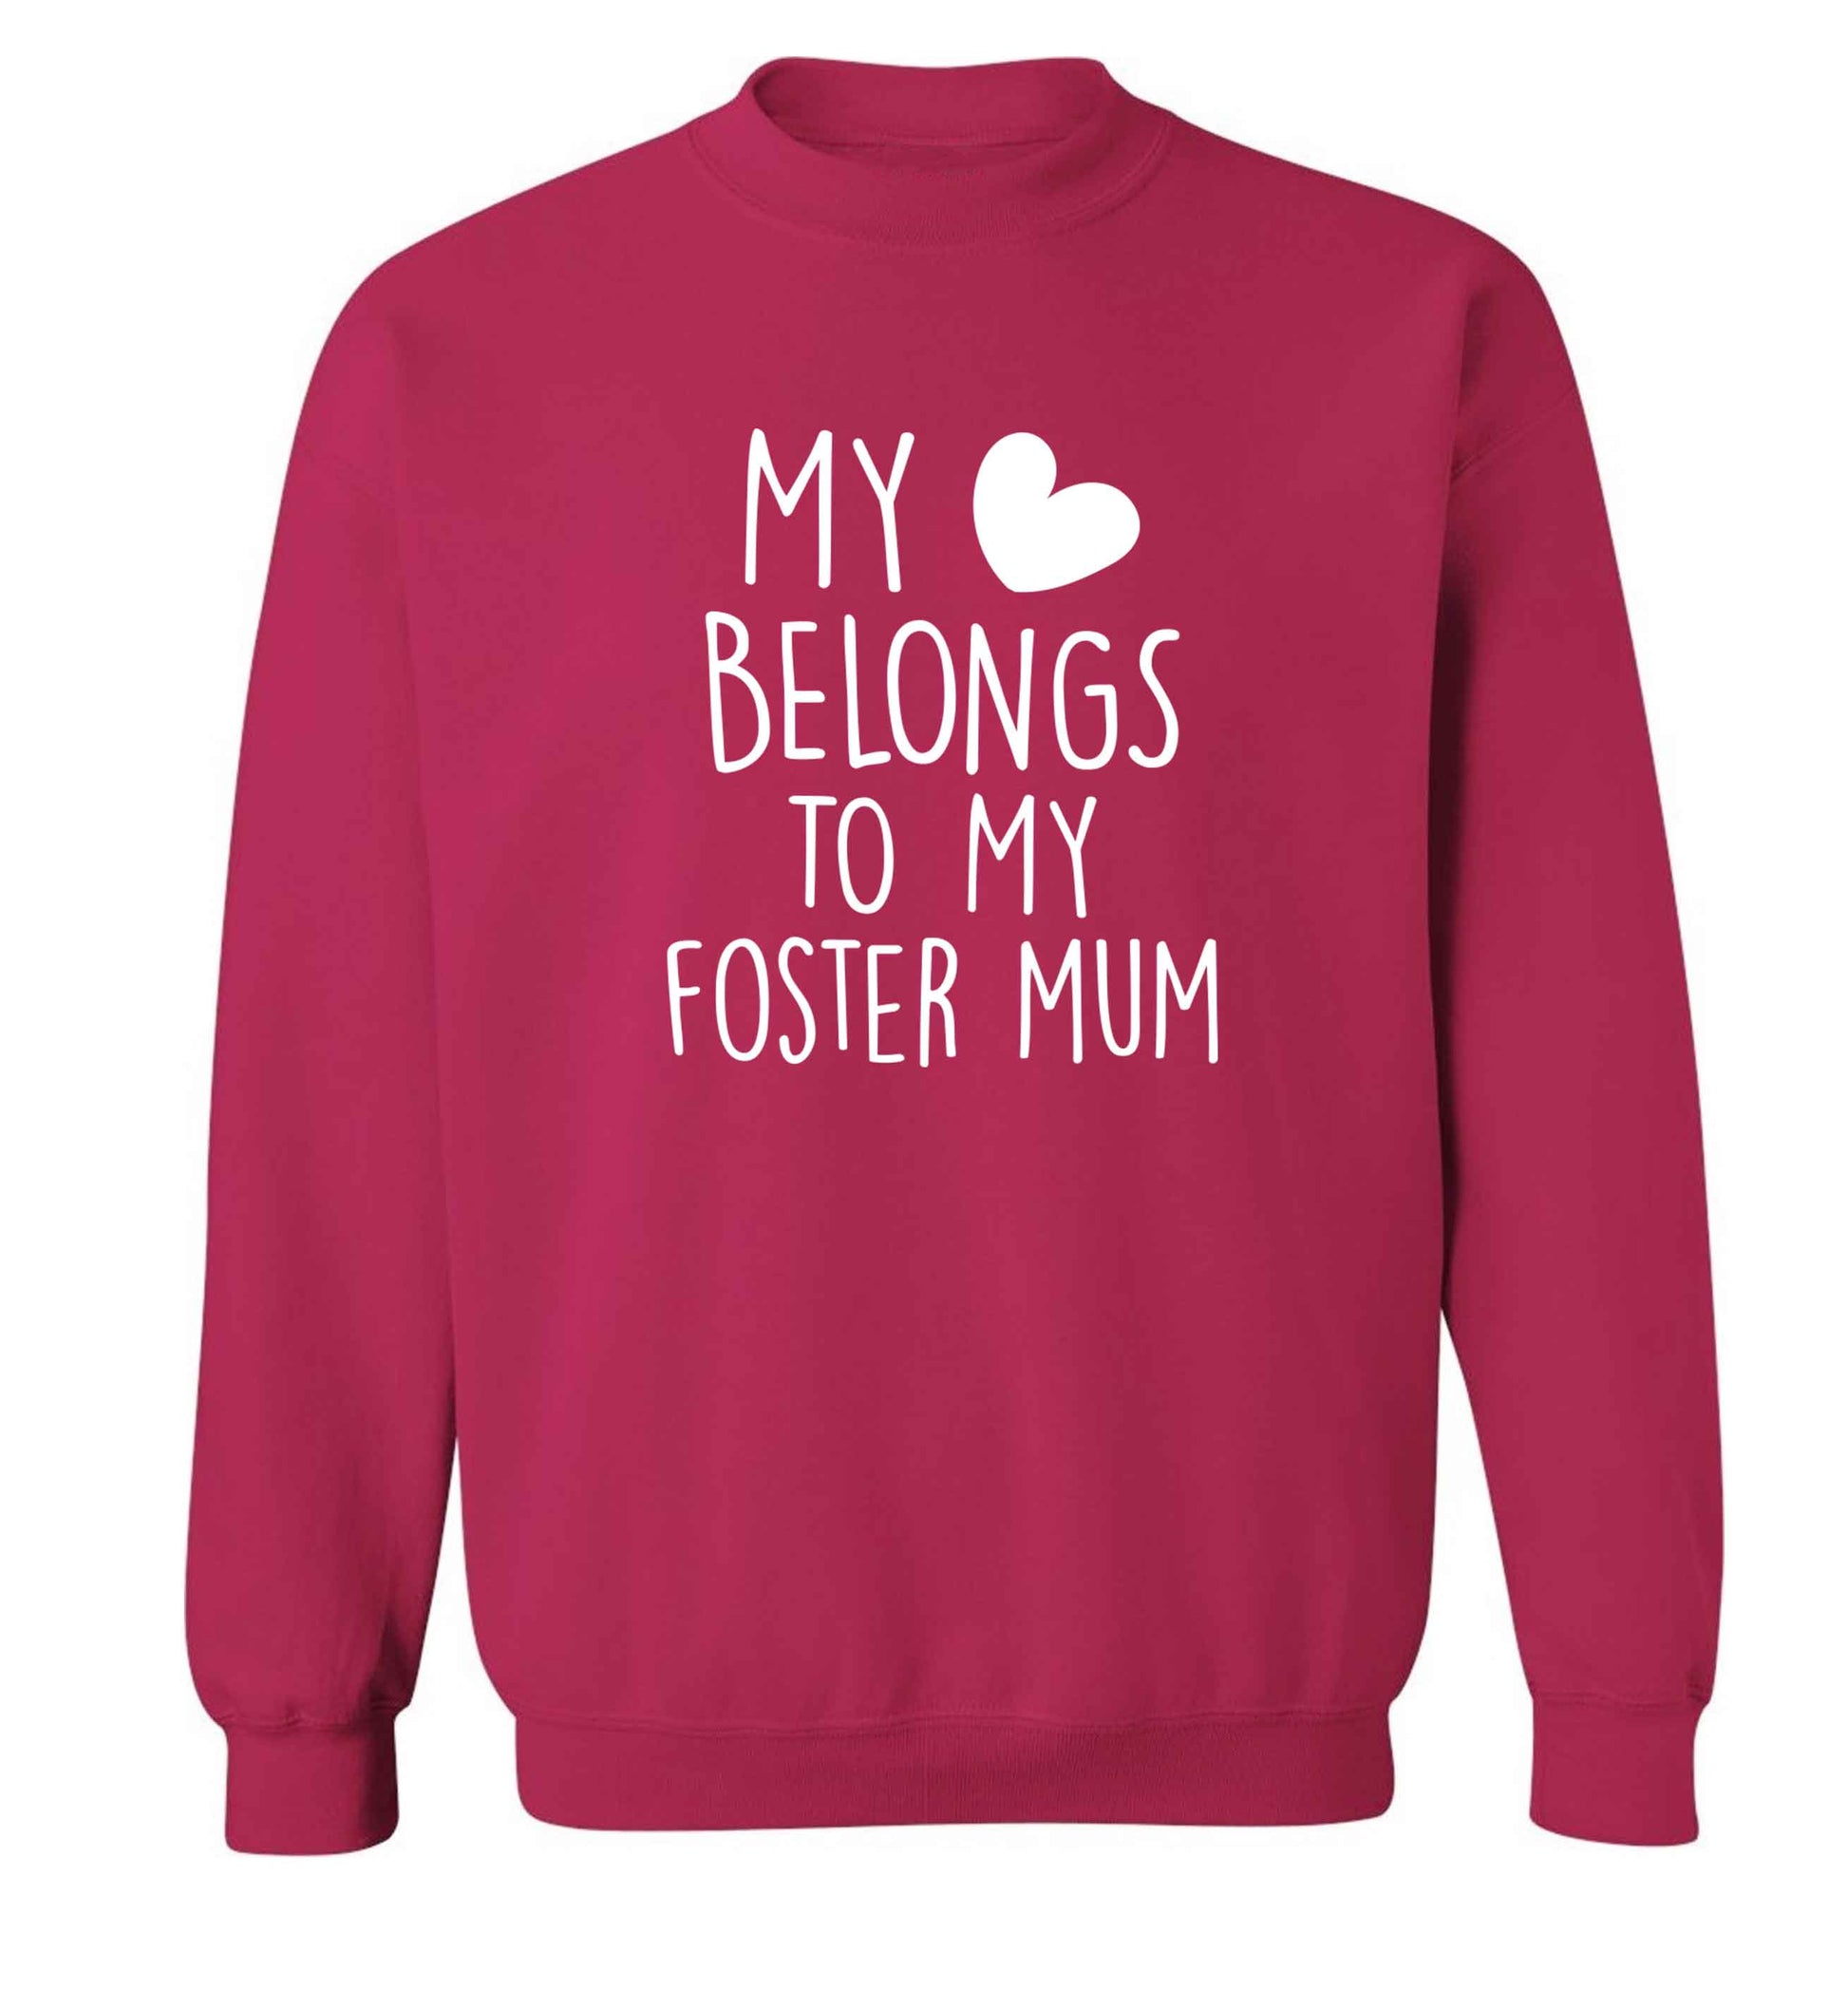 My heart belongs to my foster mum adult's unisex pink sweater 2XL